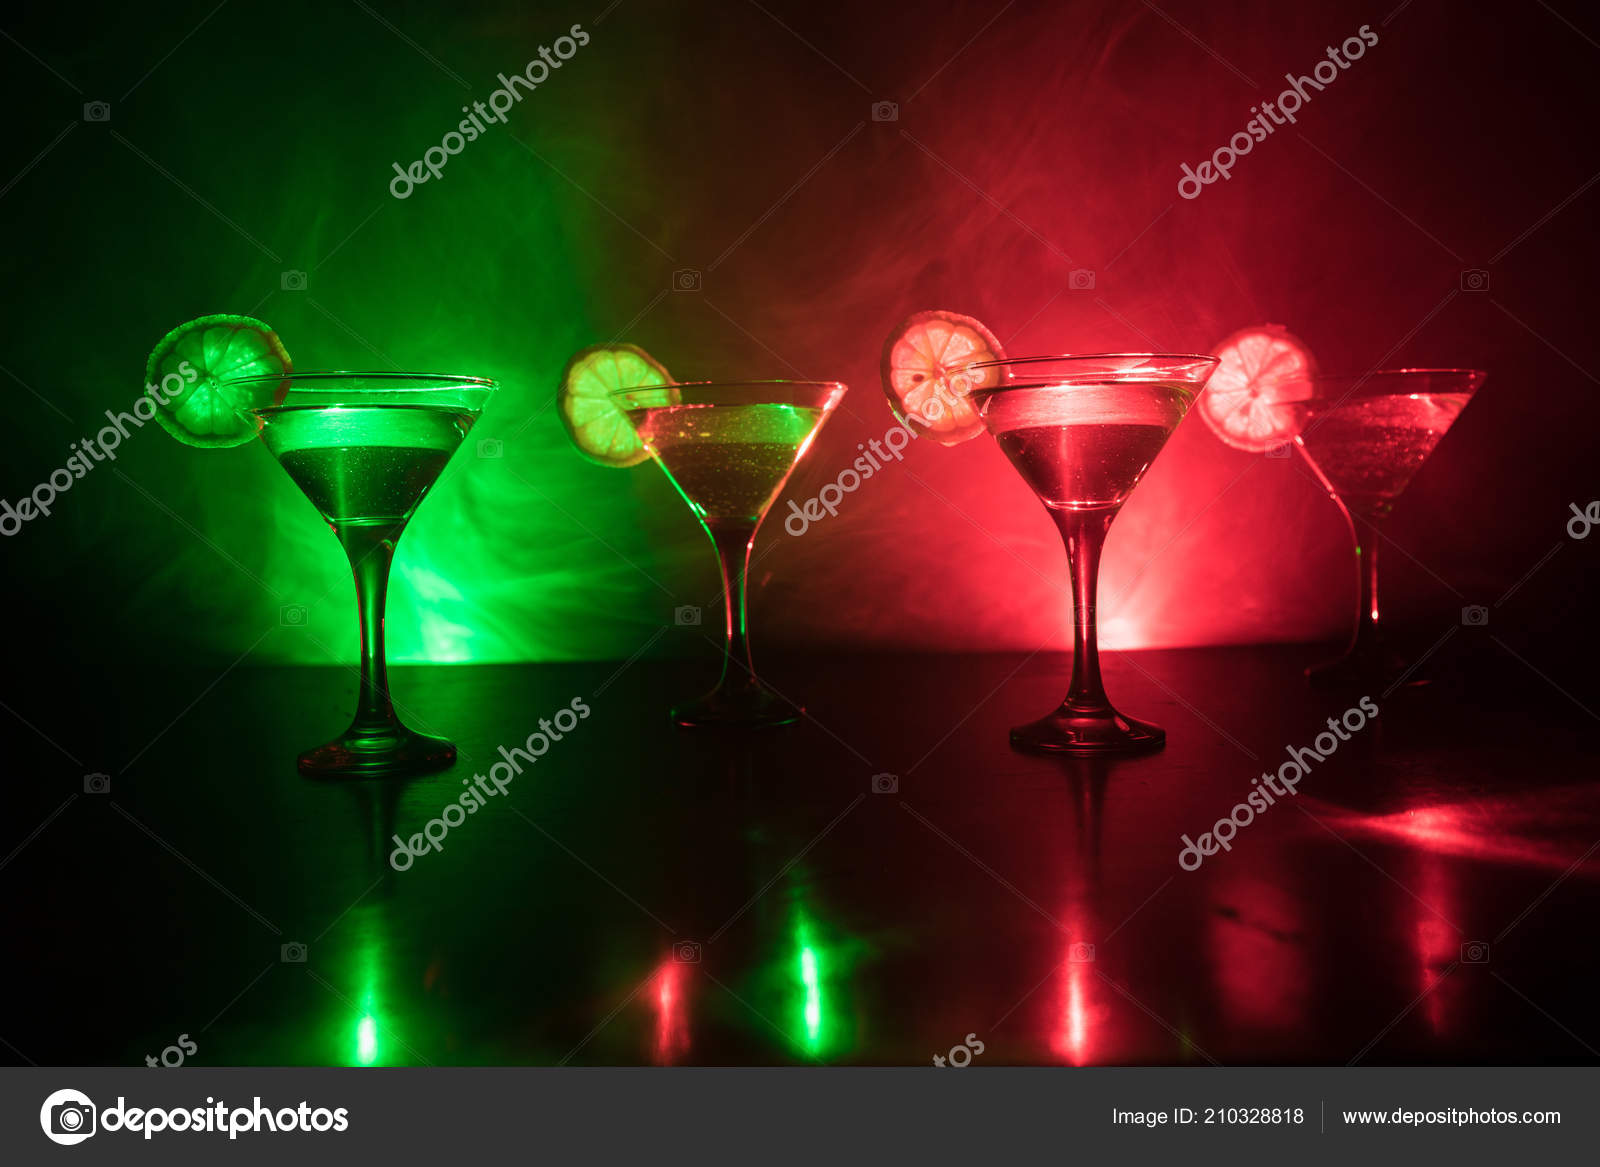 https://st4.depositphotos.com/9904426/21032/i/1600/depositphotos_210328818-stock-photo-several-glasses-famous-cocktail-martini.jpg